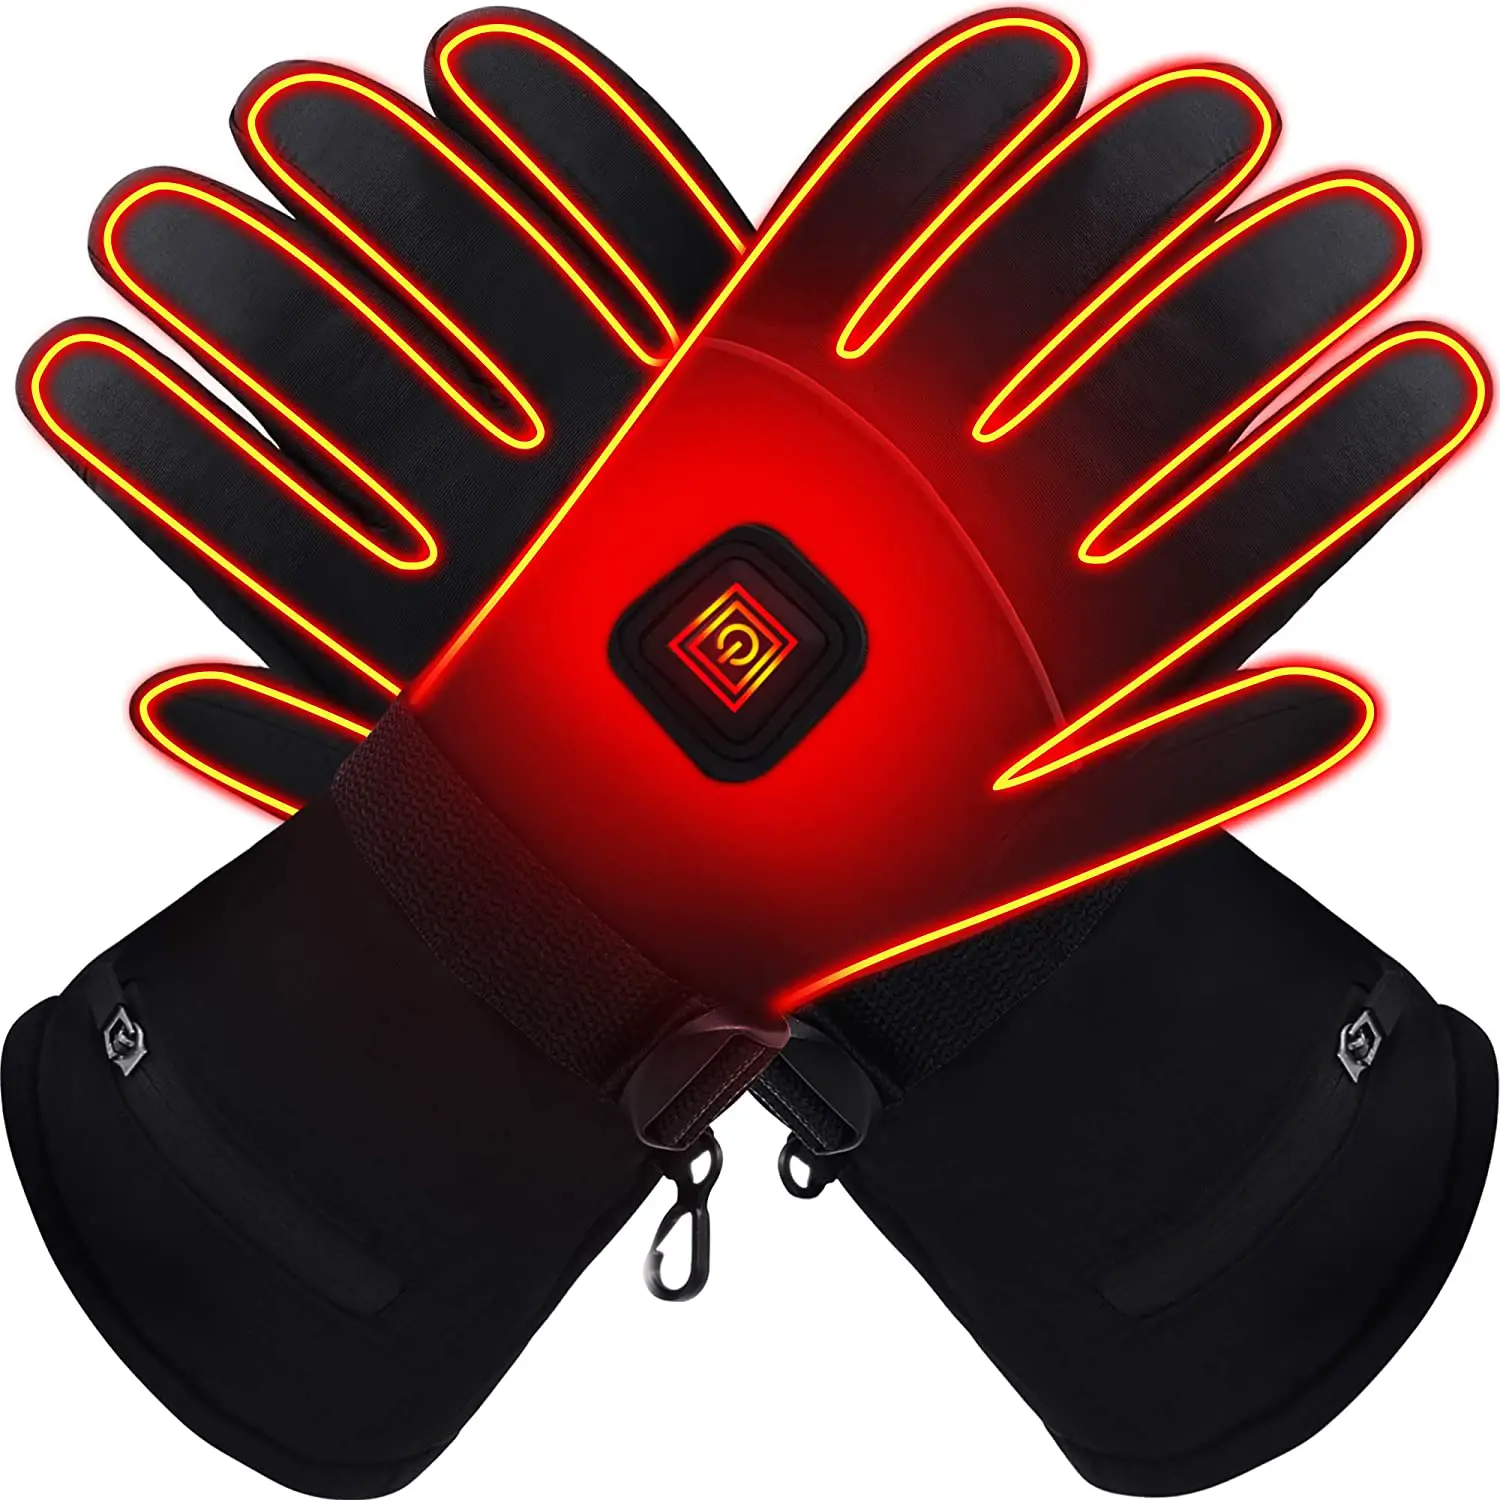 Best Rechargeable Heated Work Gloves Work Gearz